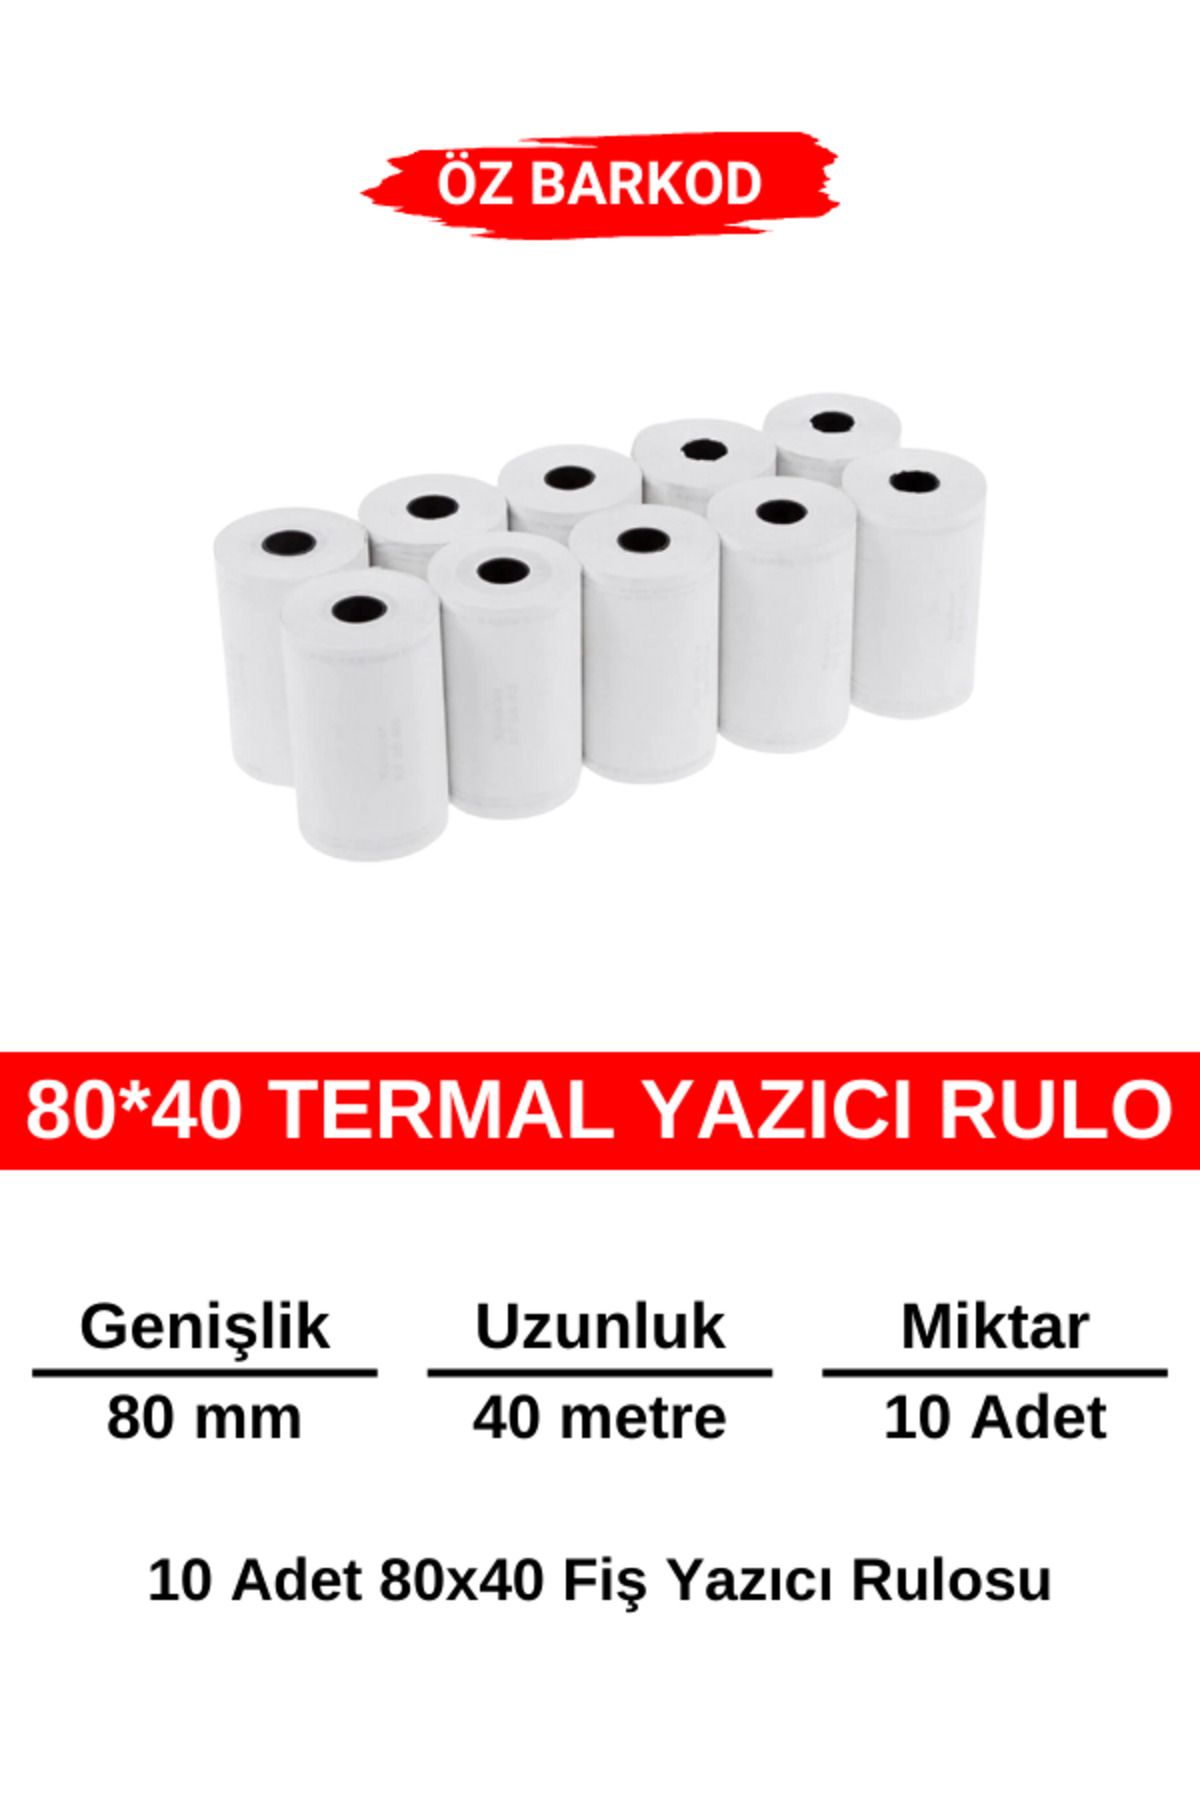 ÖZ BARKOD Termal Fiş Yazıcı Rulosu 80 mm x 40 metre - 10 Adet Termal Rulo